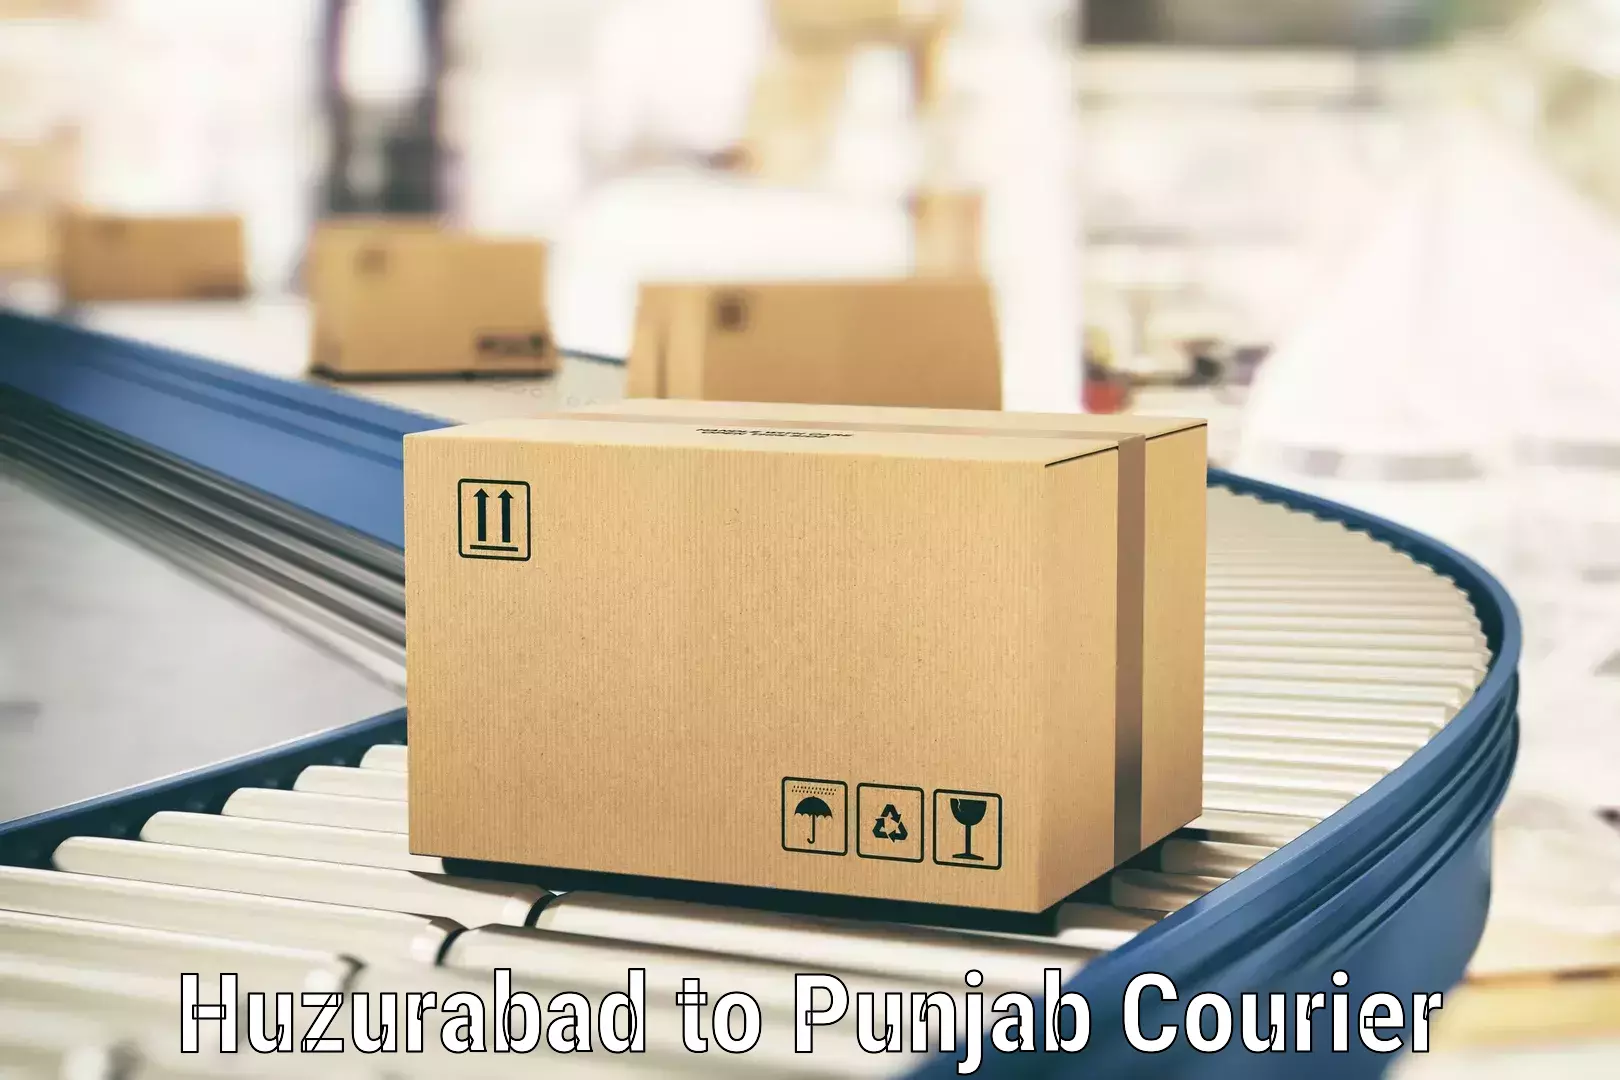 24-hour courier services Huzurabad to Bathinda